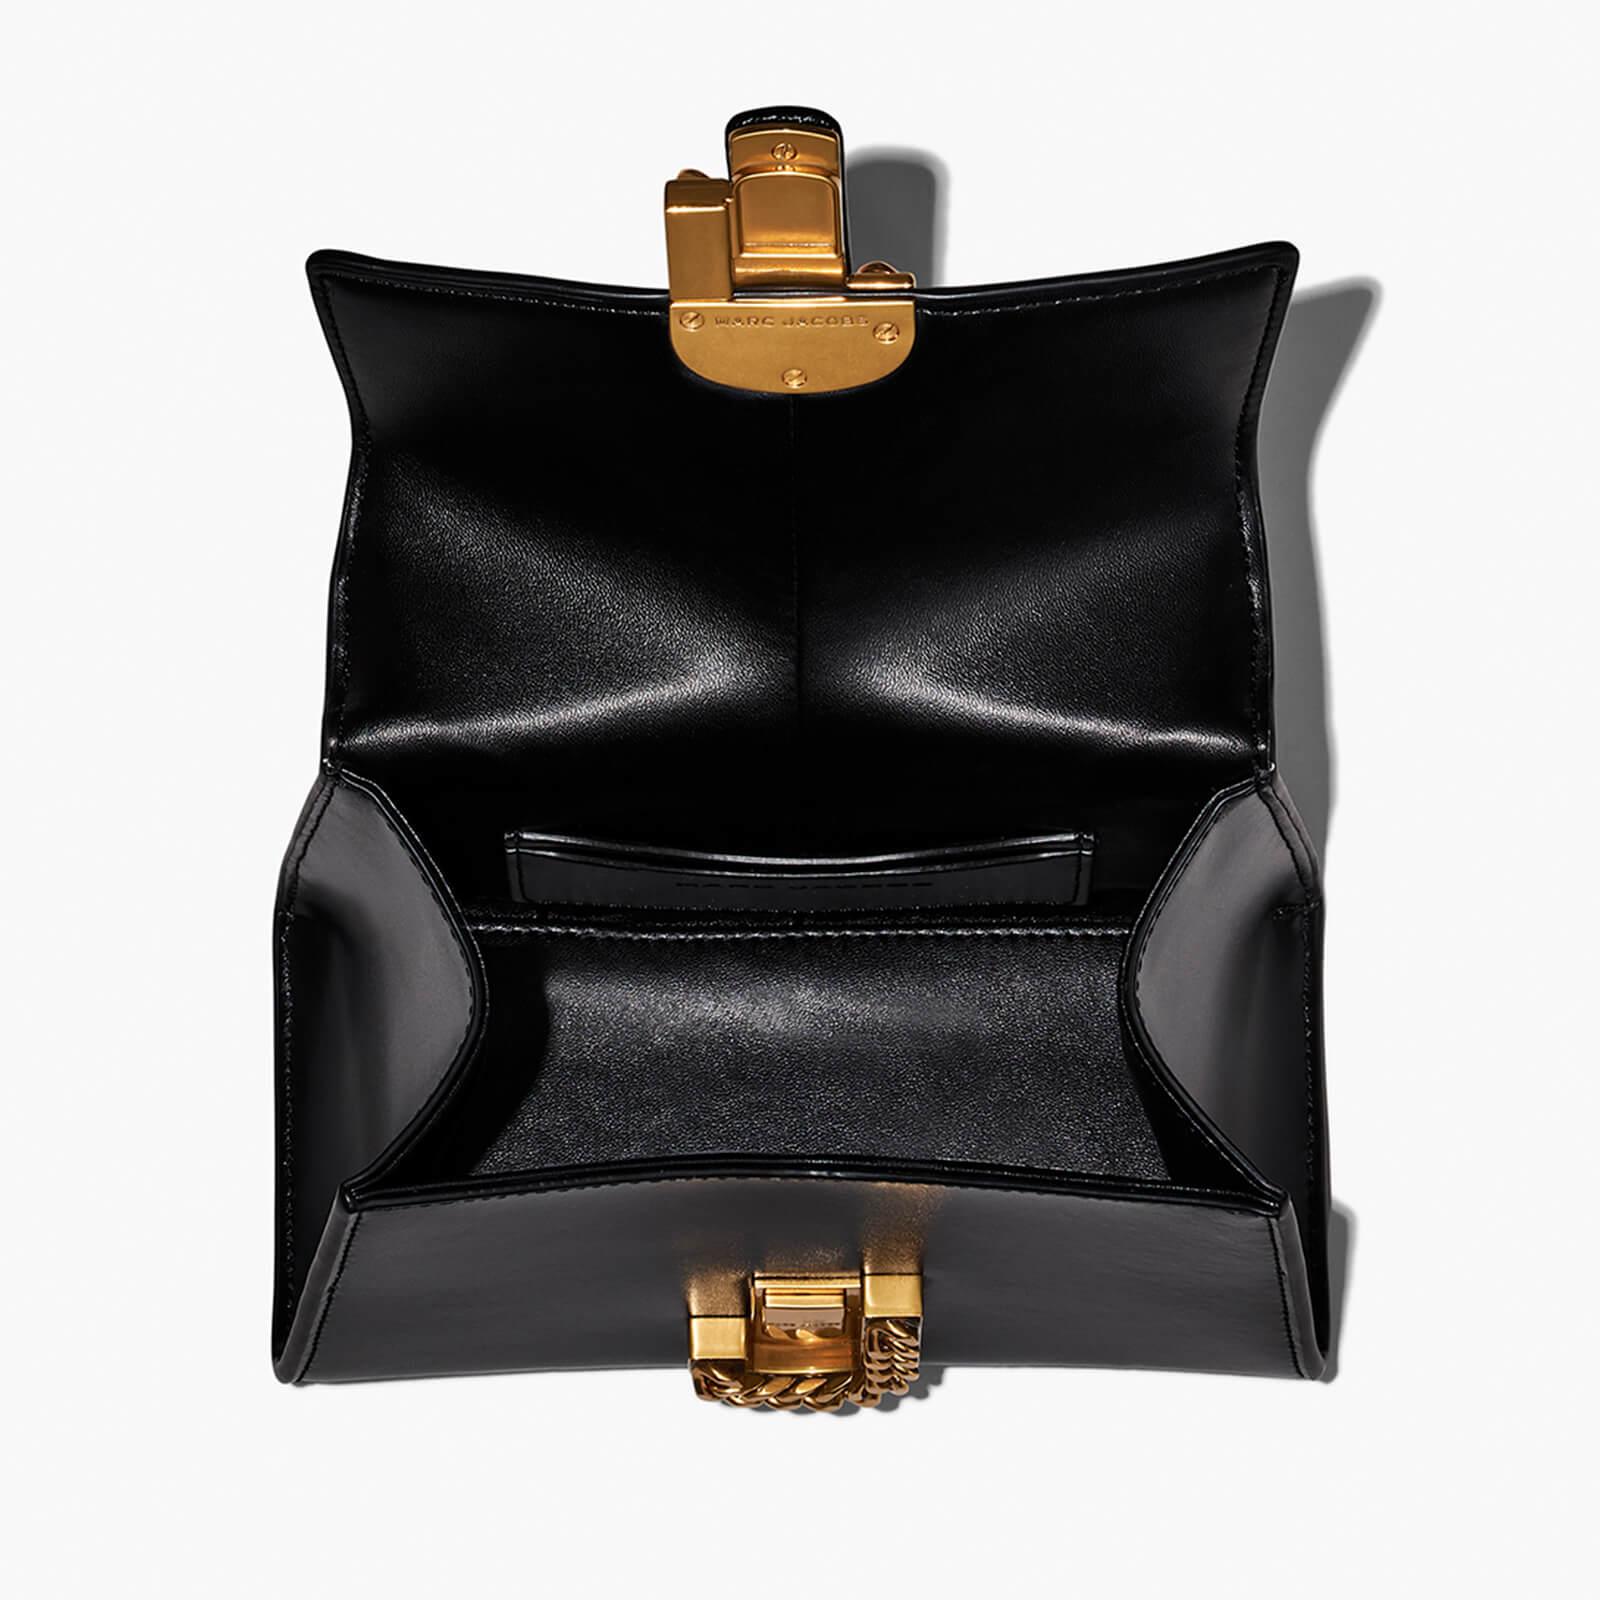 Marc Jacobs The Leather Small Tote Black Handbag - Ferraris Boutique